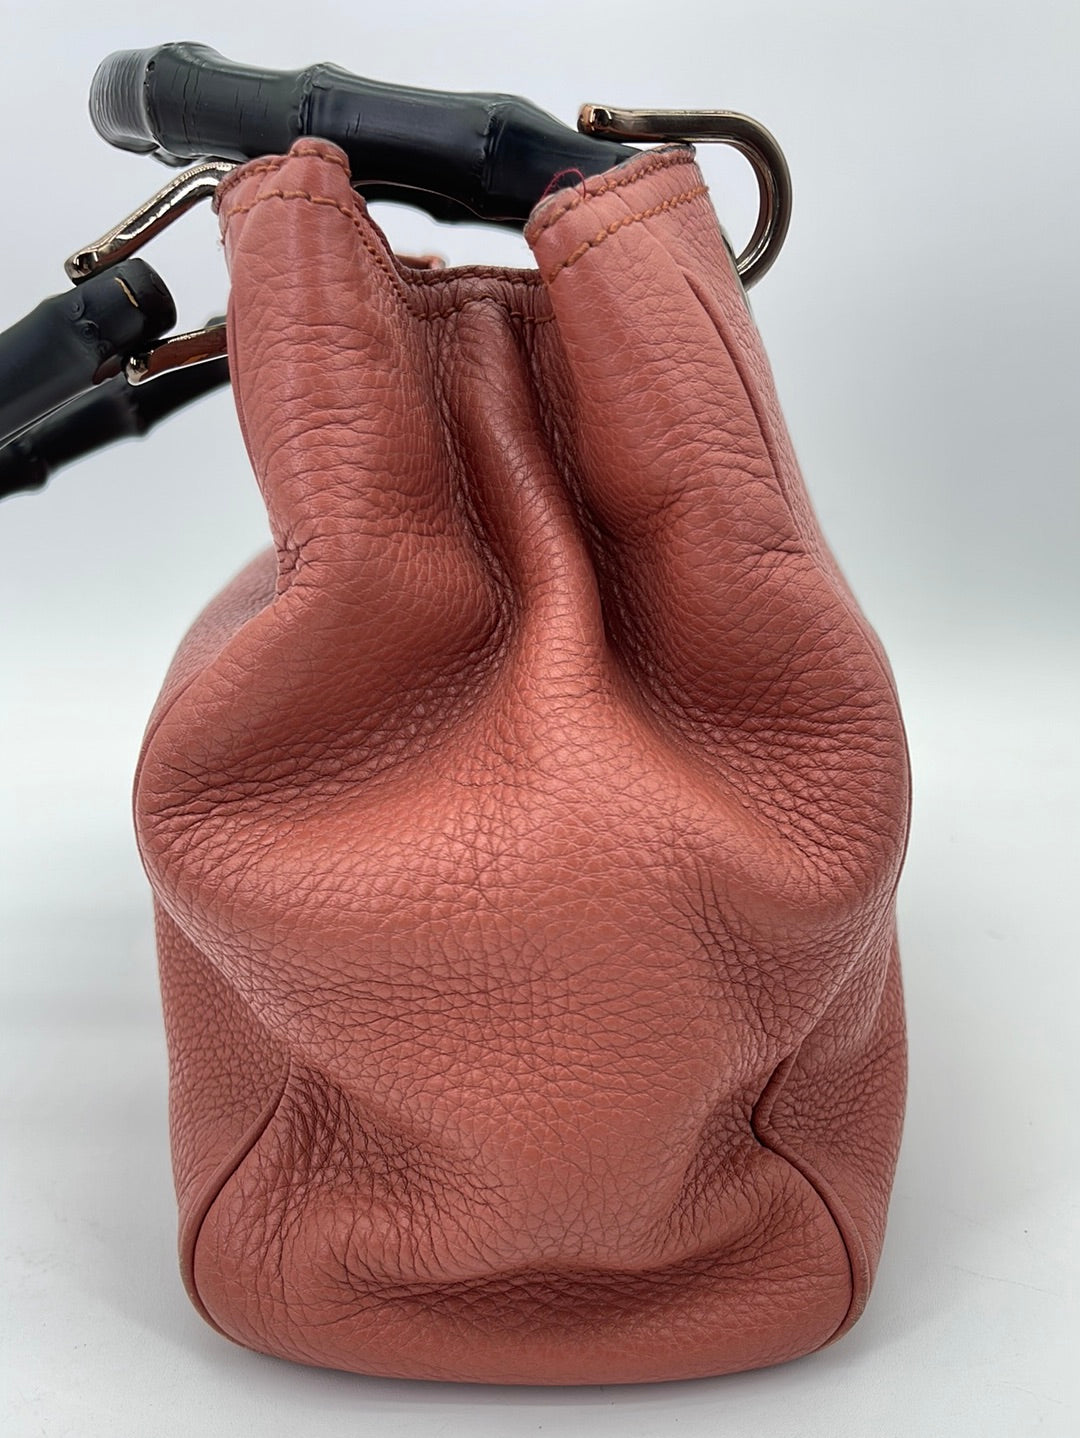 Preloved Gucci Bamboo Shopper Tote Coral Leather Medium 336032520981 062323 $200  Flashoff